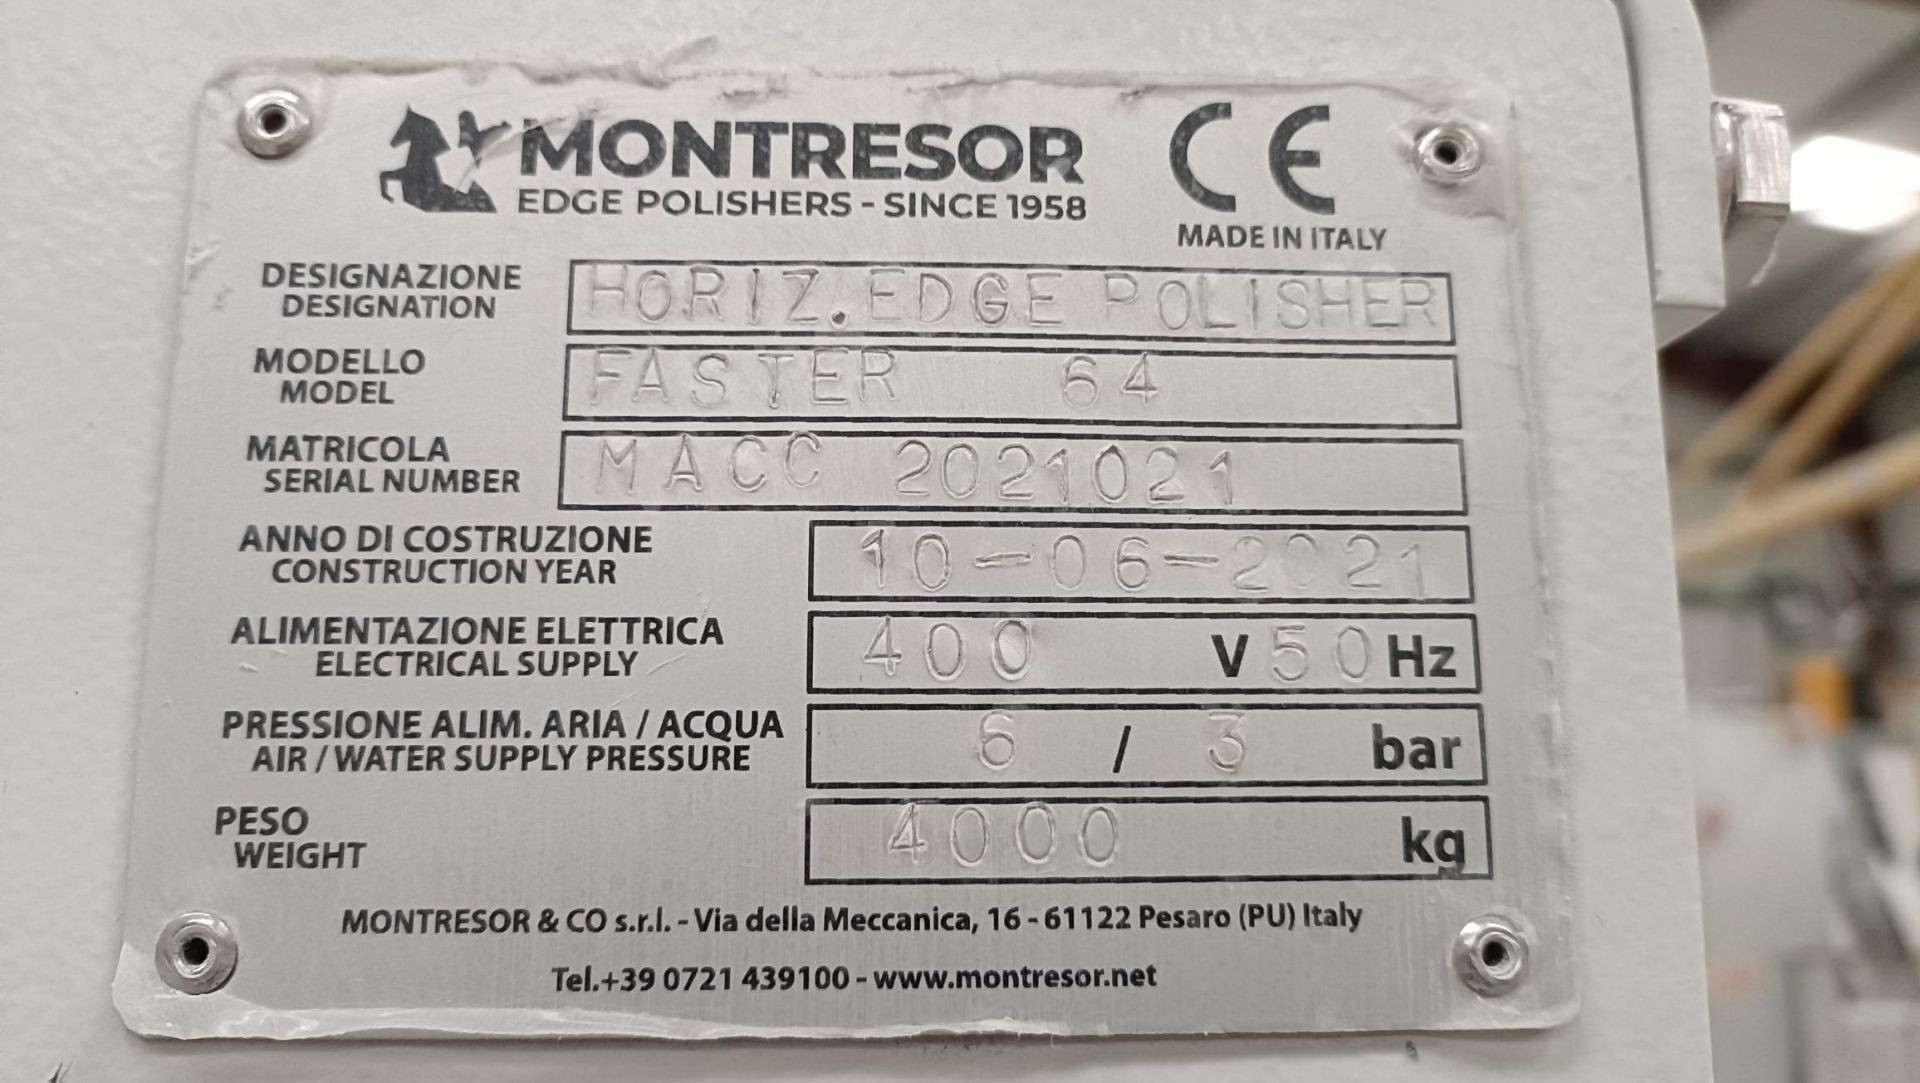 Montresor Faster 64 horizontal edge polisher (2021) - Image 15 of 15